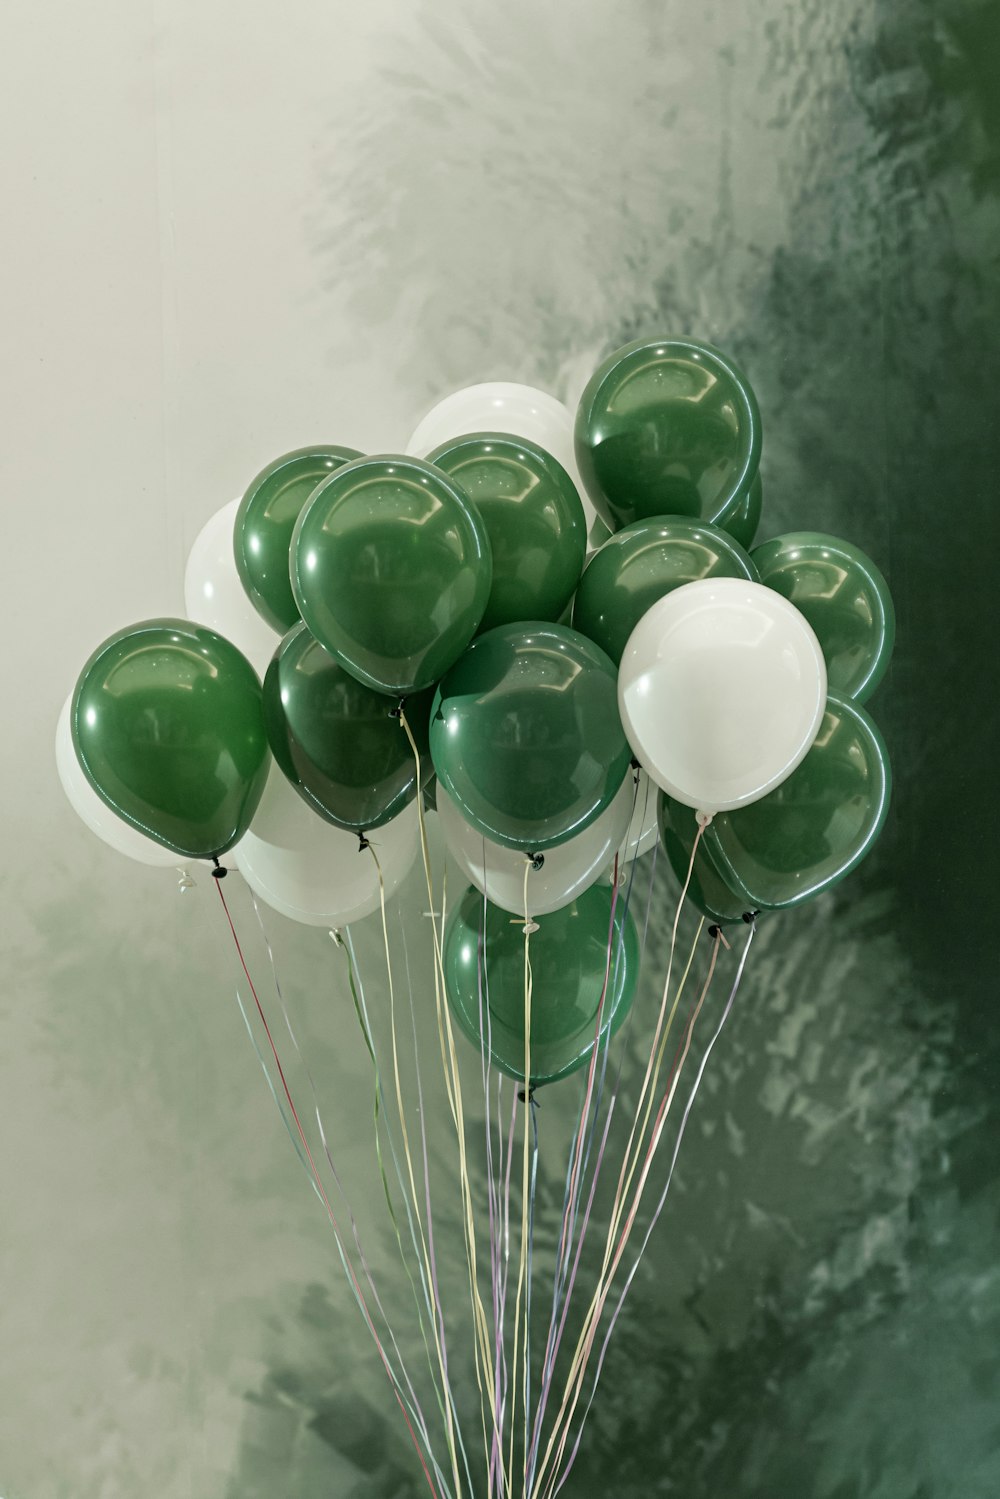 palloncini verdi e bianchi